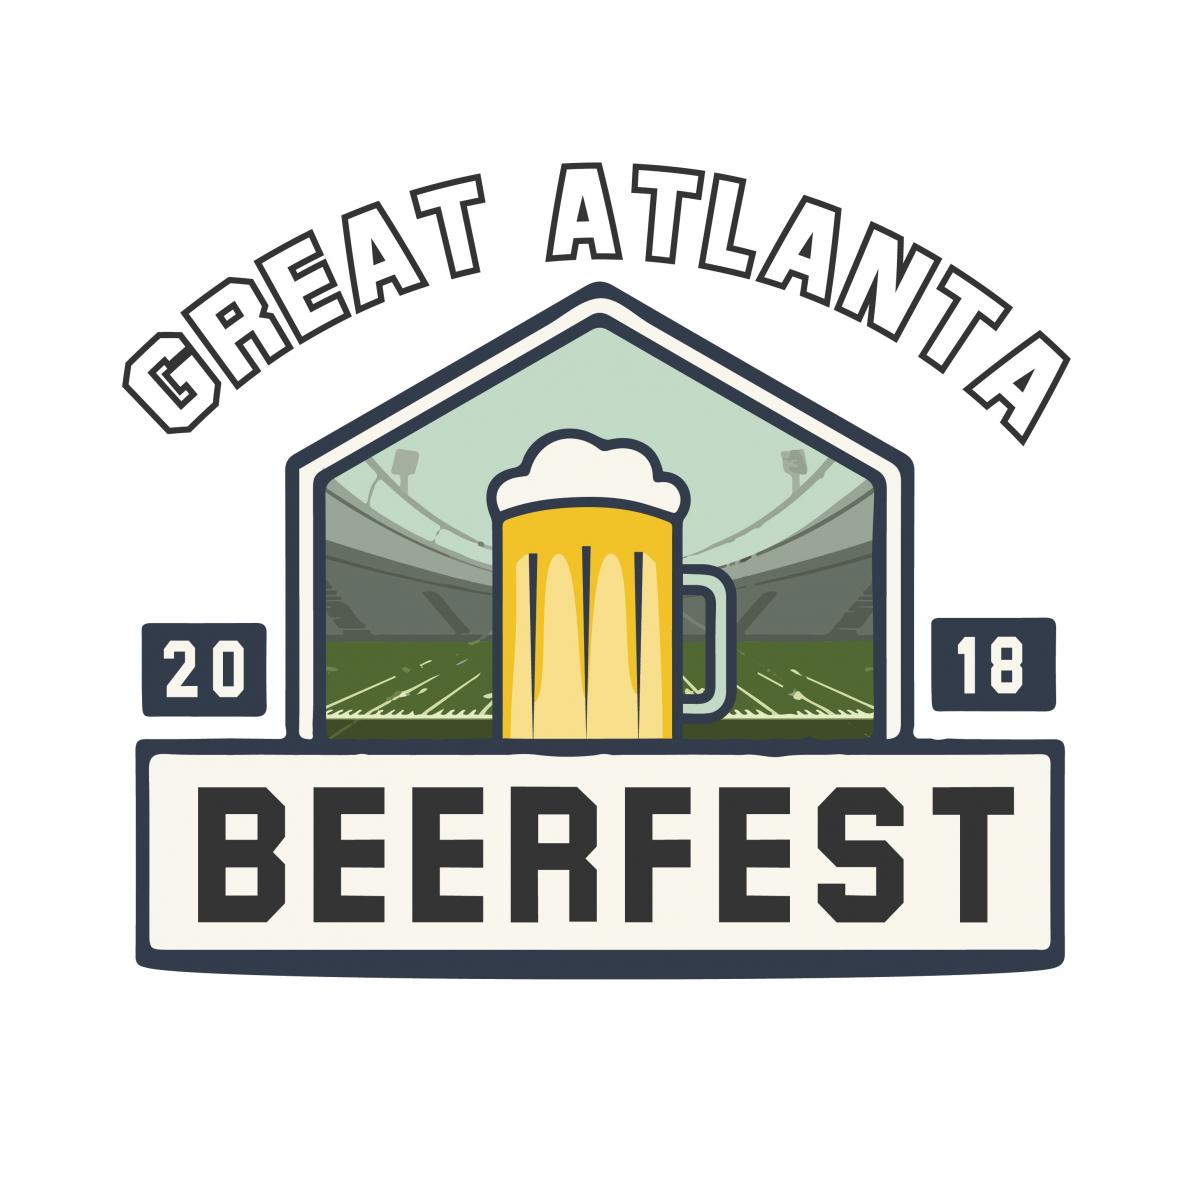 Great Atlanta Beer Festival